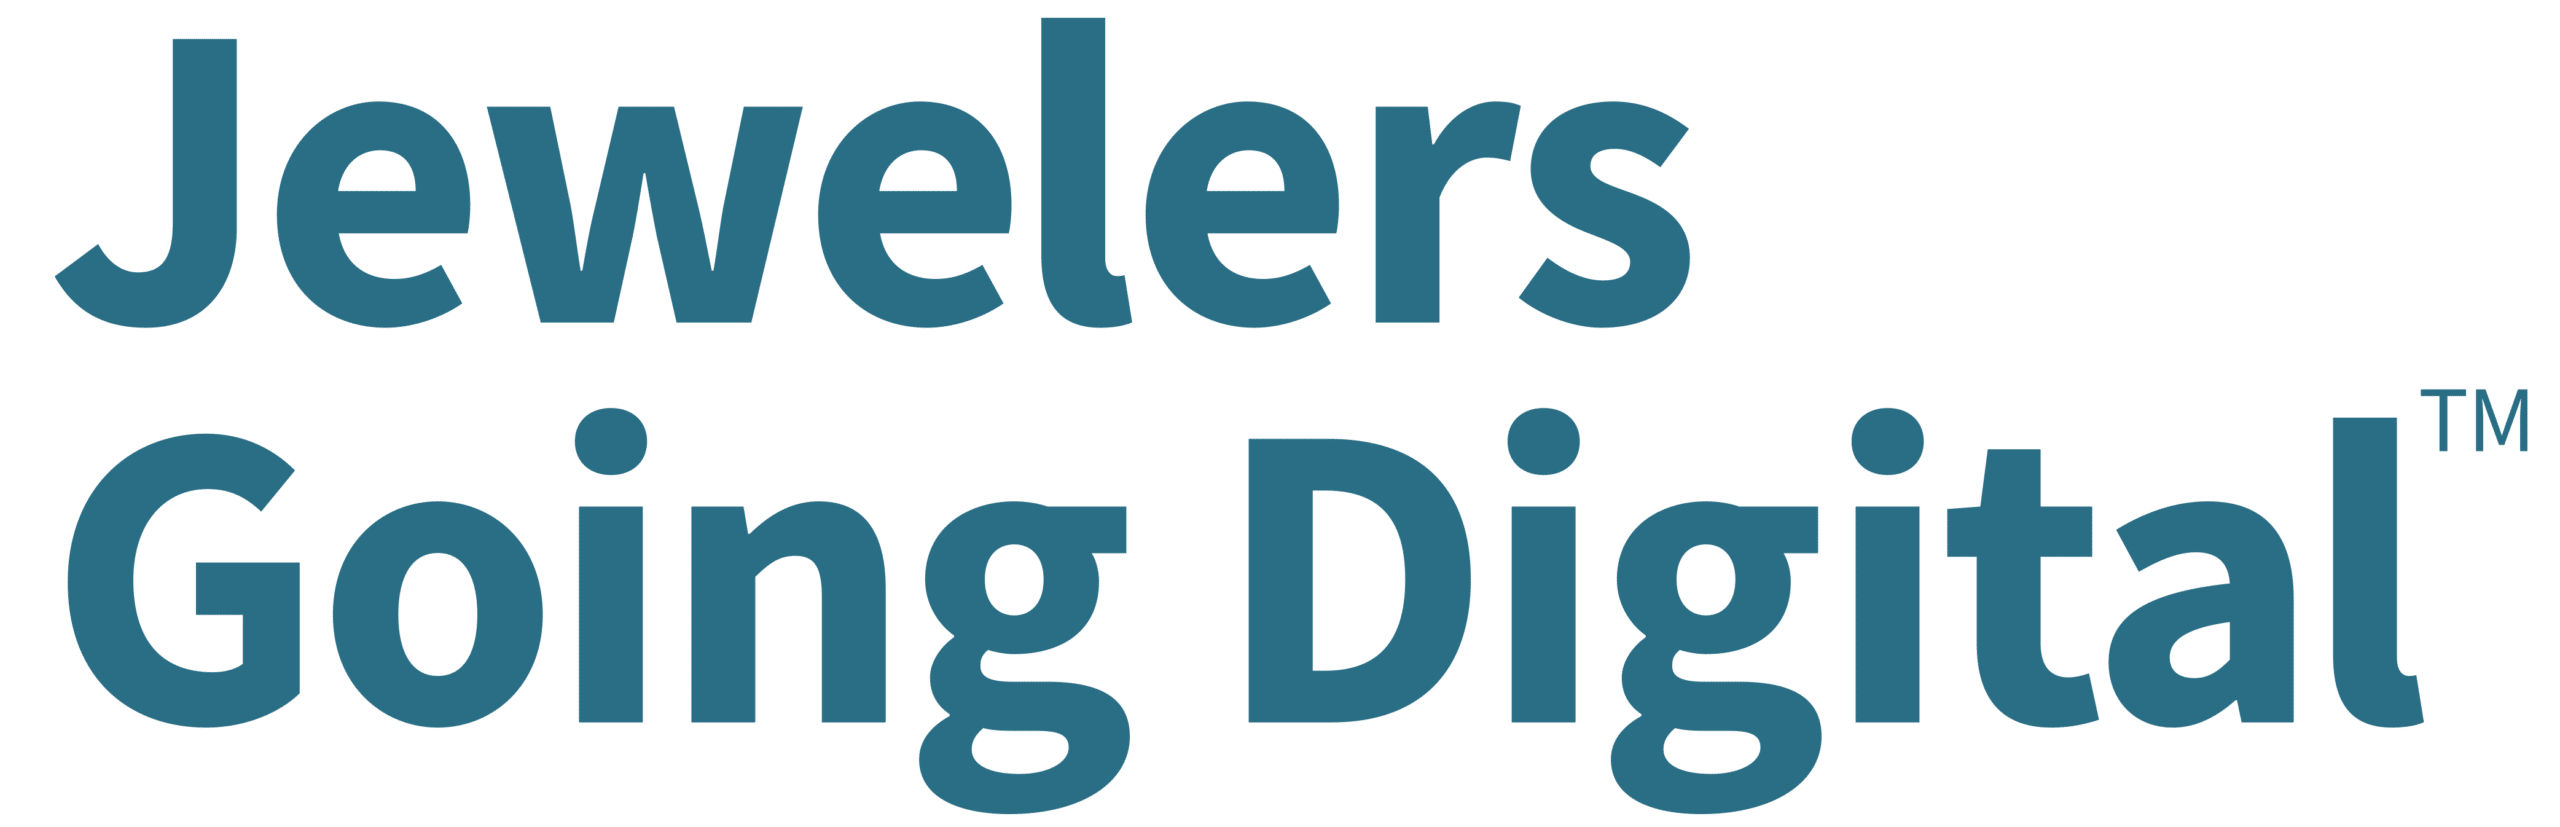 Jewelers Going Digital Logo